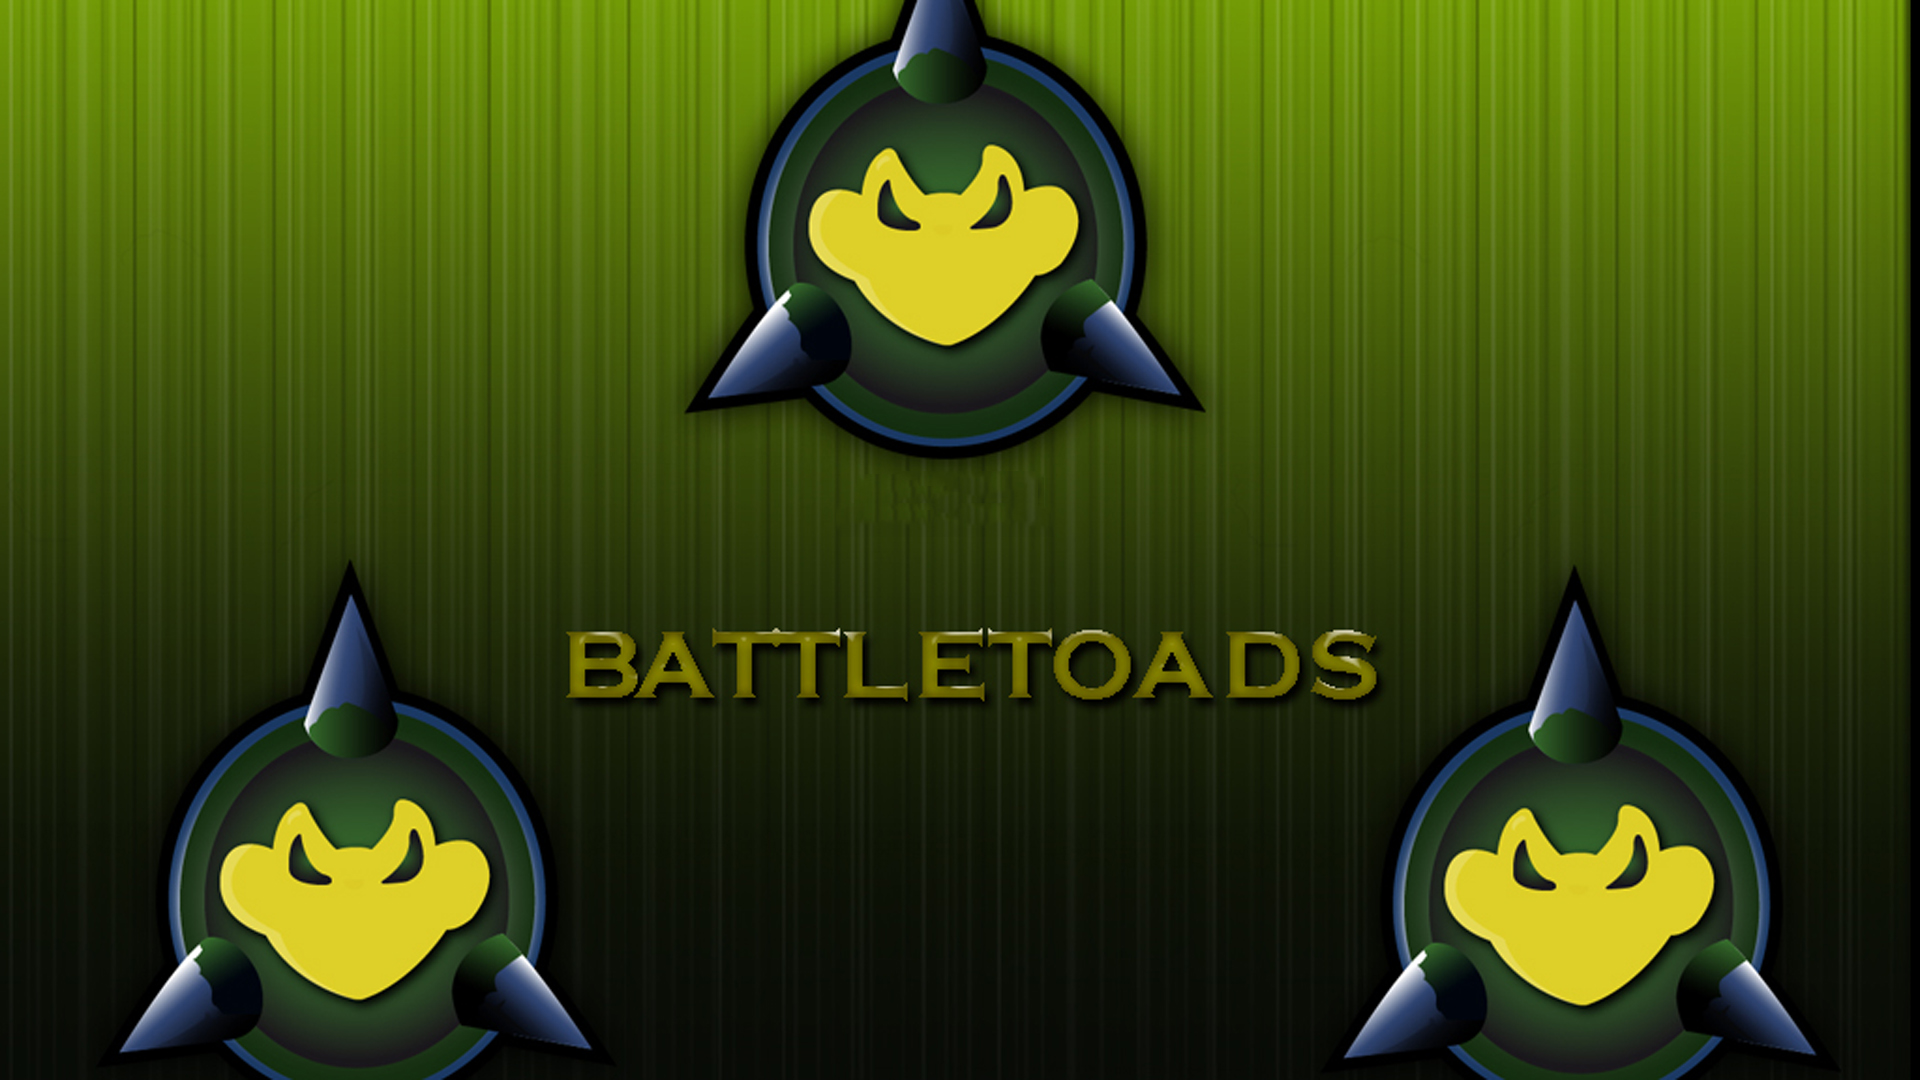 Video Game Battletoads 1920x1080